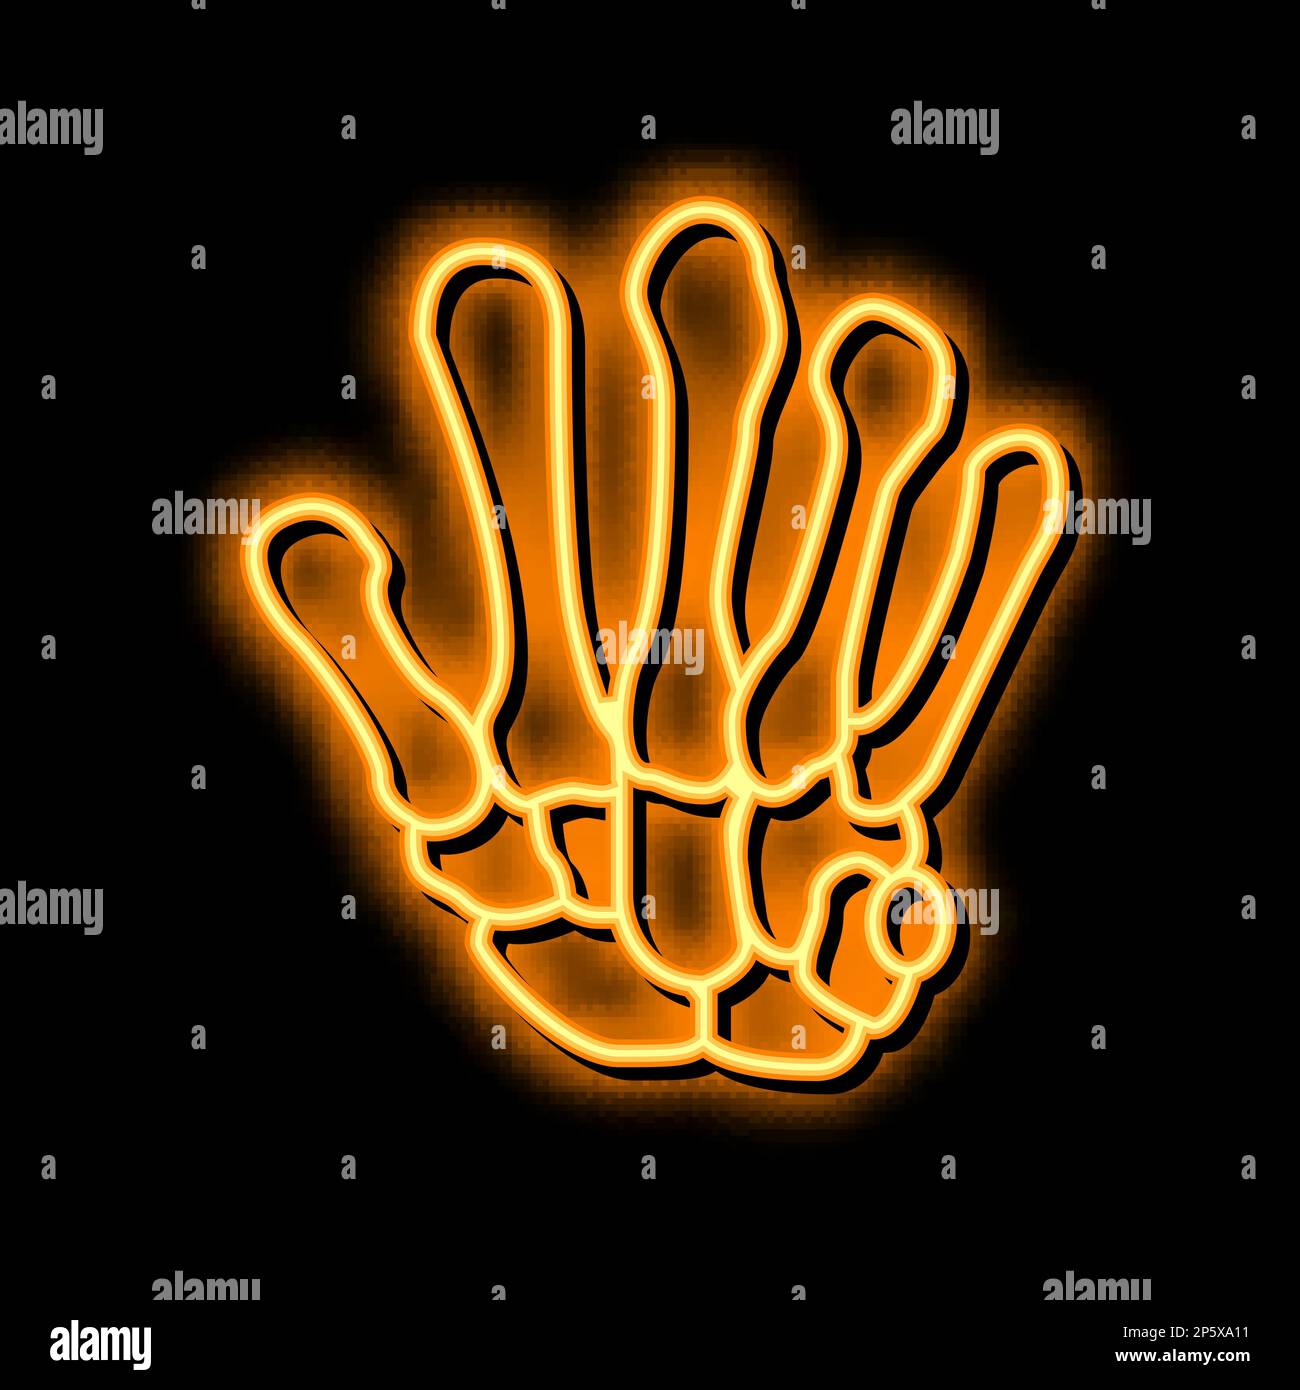 wrist bone neon glow icon illustration Stock Vector